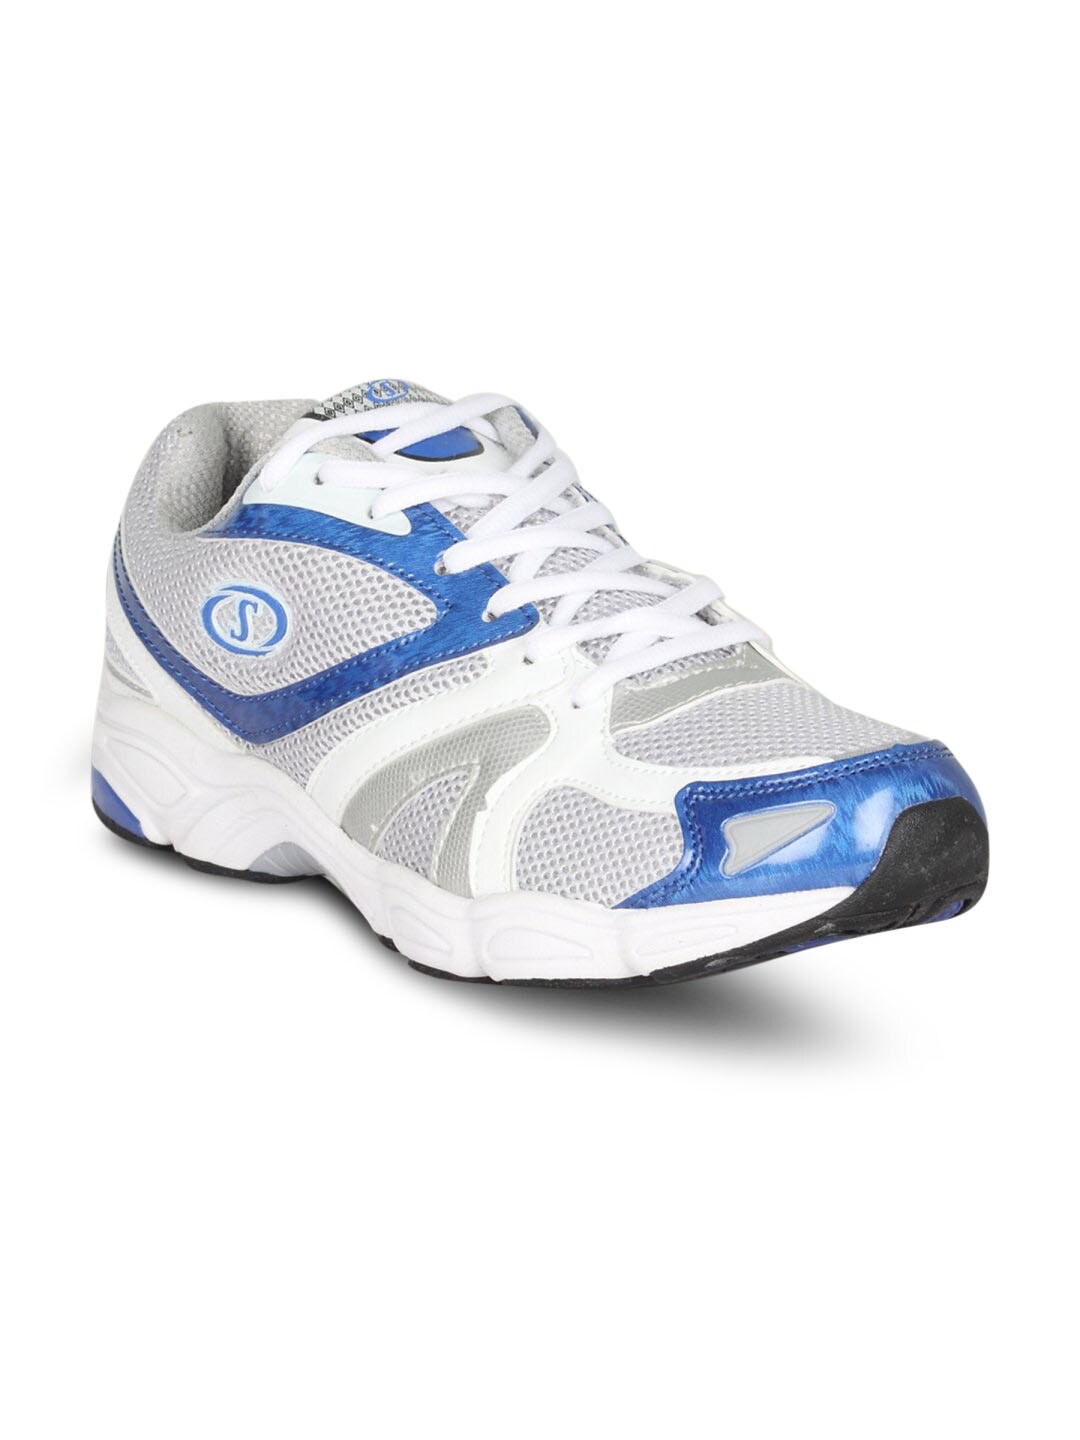 Spalding Men's Running Royal Blue Shoe